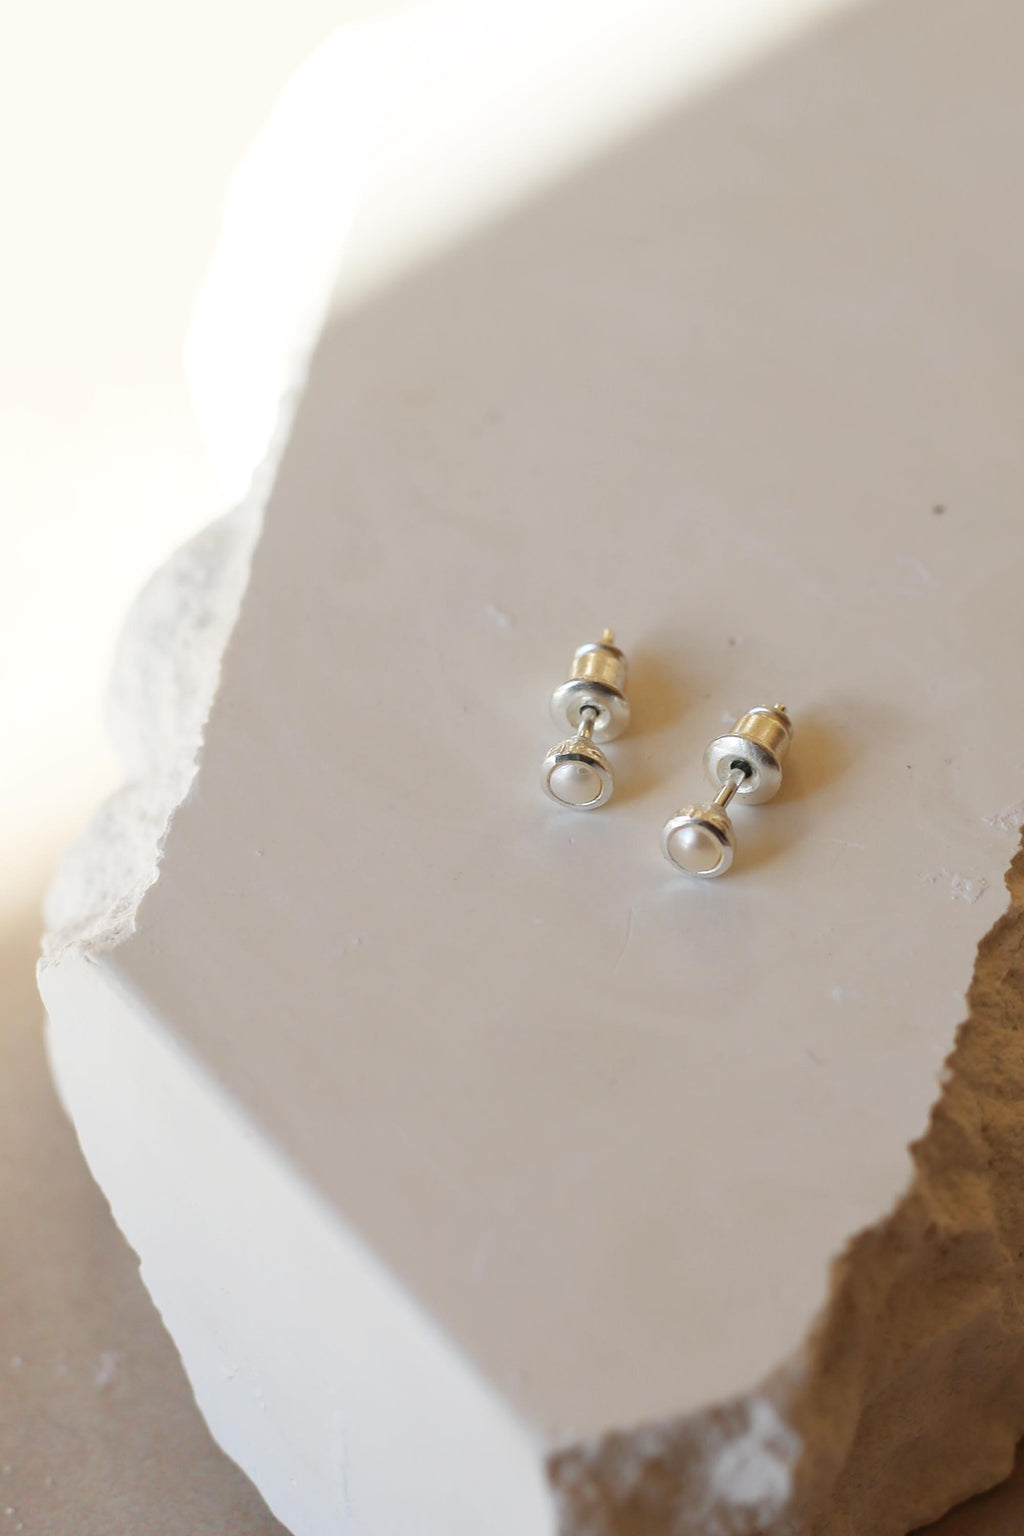 Pearl Stud Earrings Silver